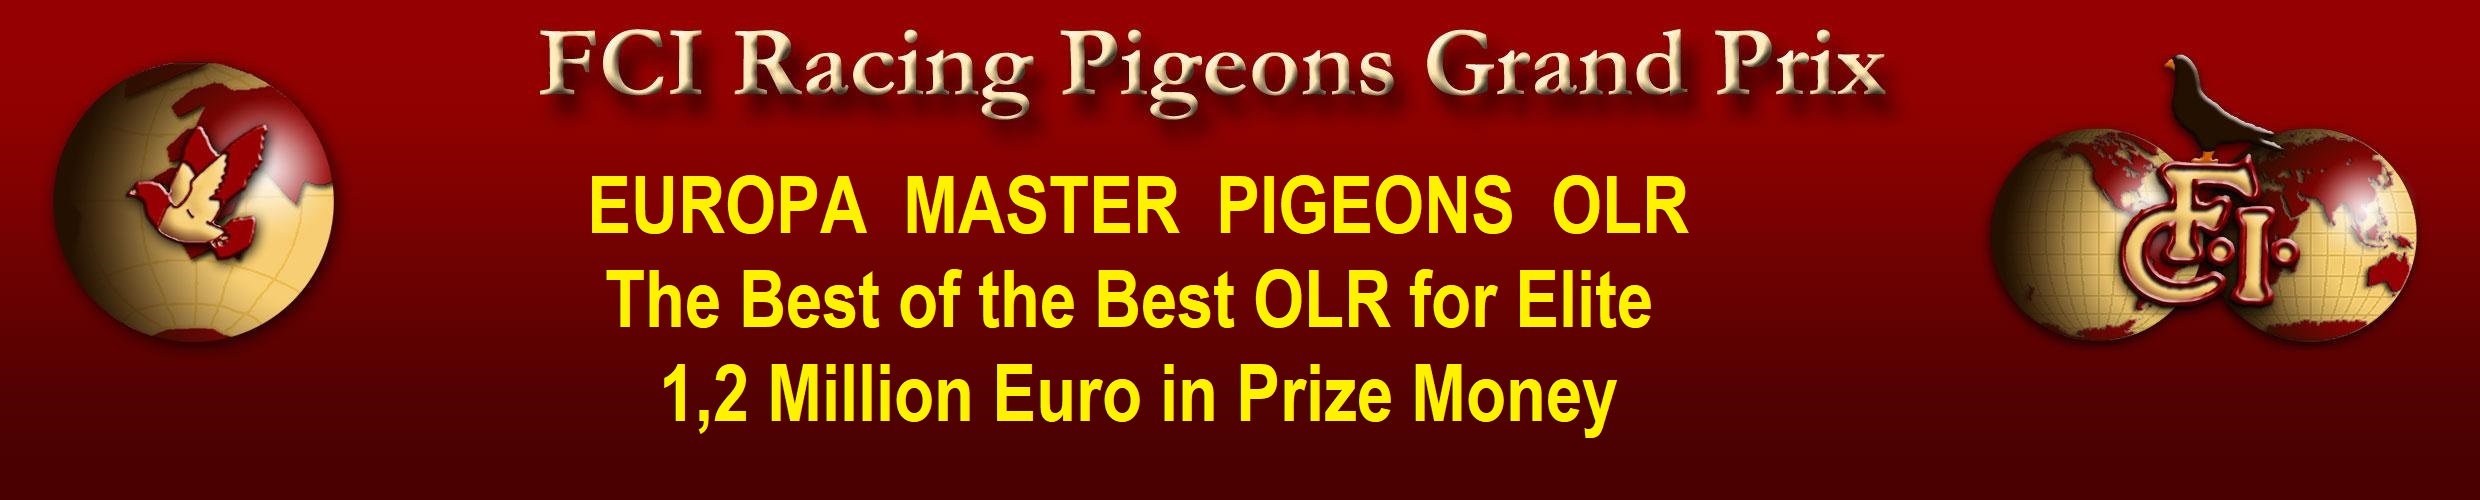 FCI Racing Pigeons Grand Prix